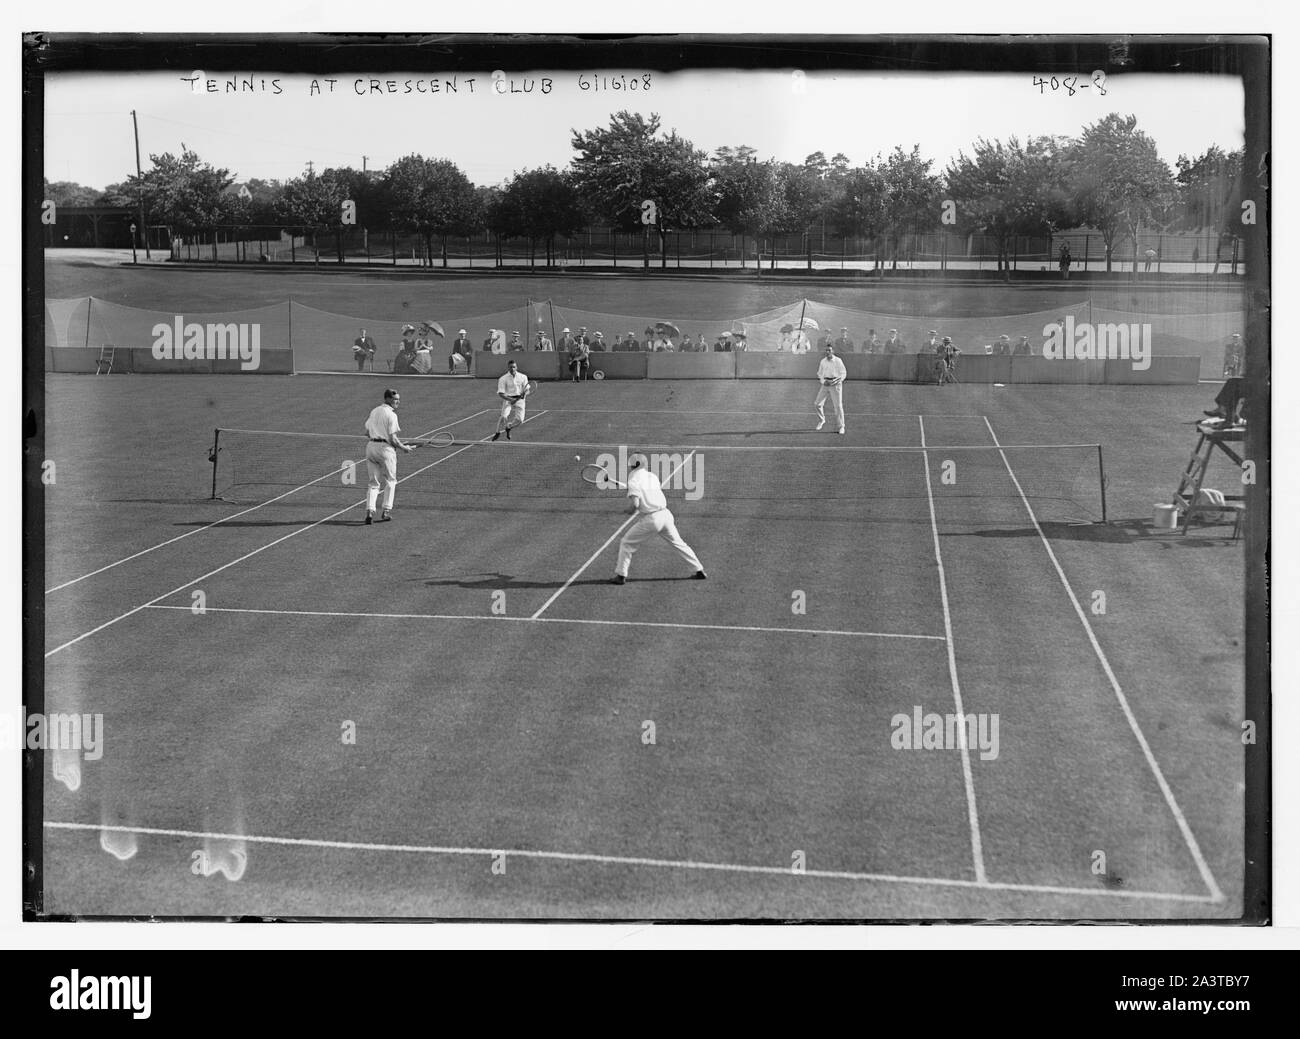 Tennis match at Cresent Club Stock Photo